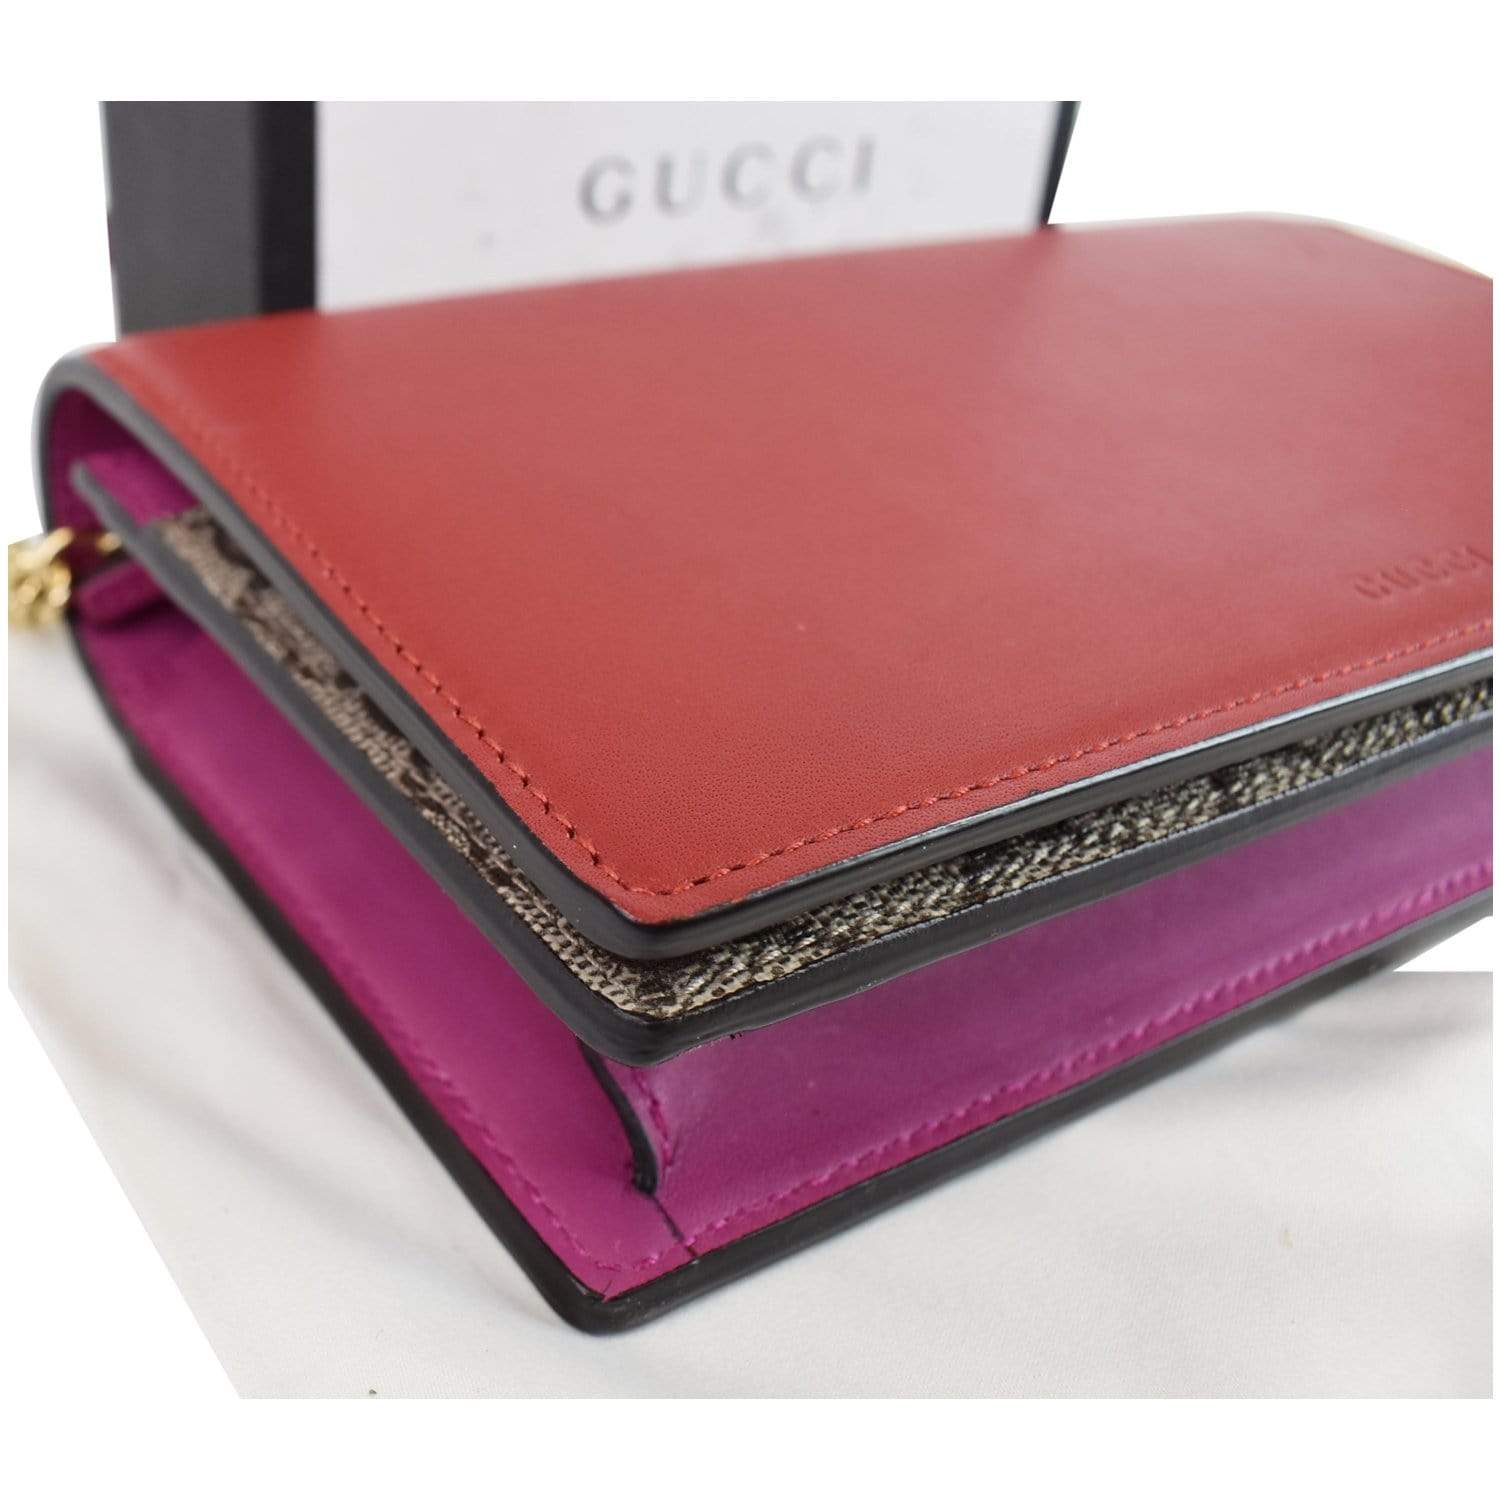 NWT Authentic Gucci GG Supreme Apples Pouch, Clutch, Bag, Handbag 624881